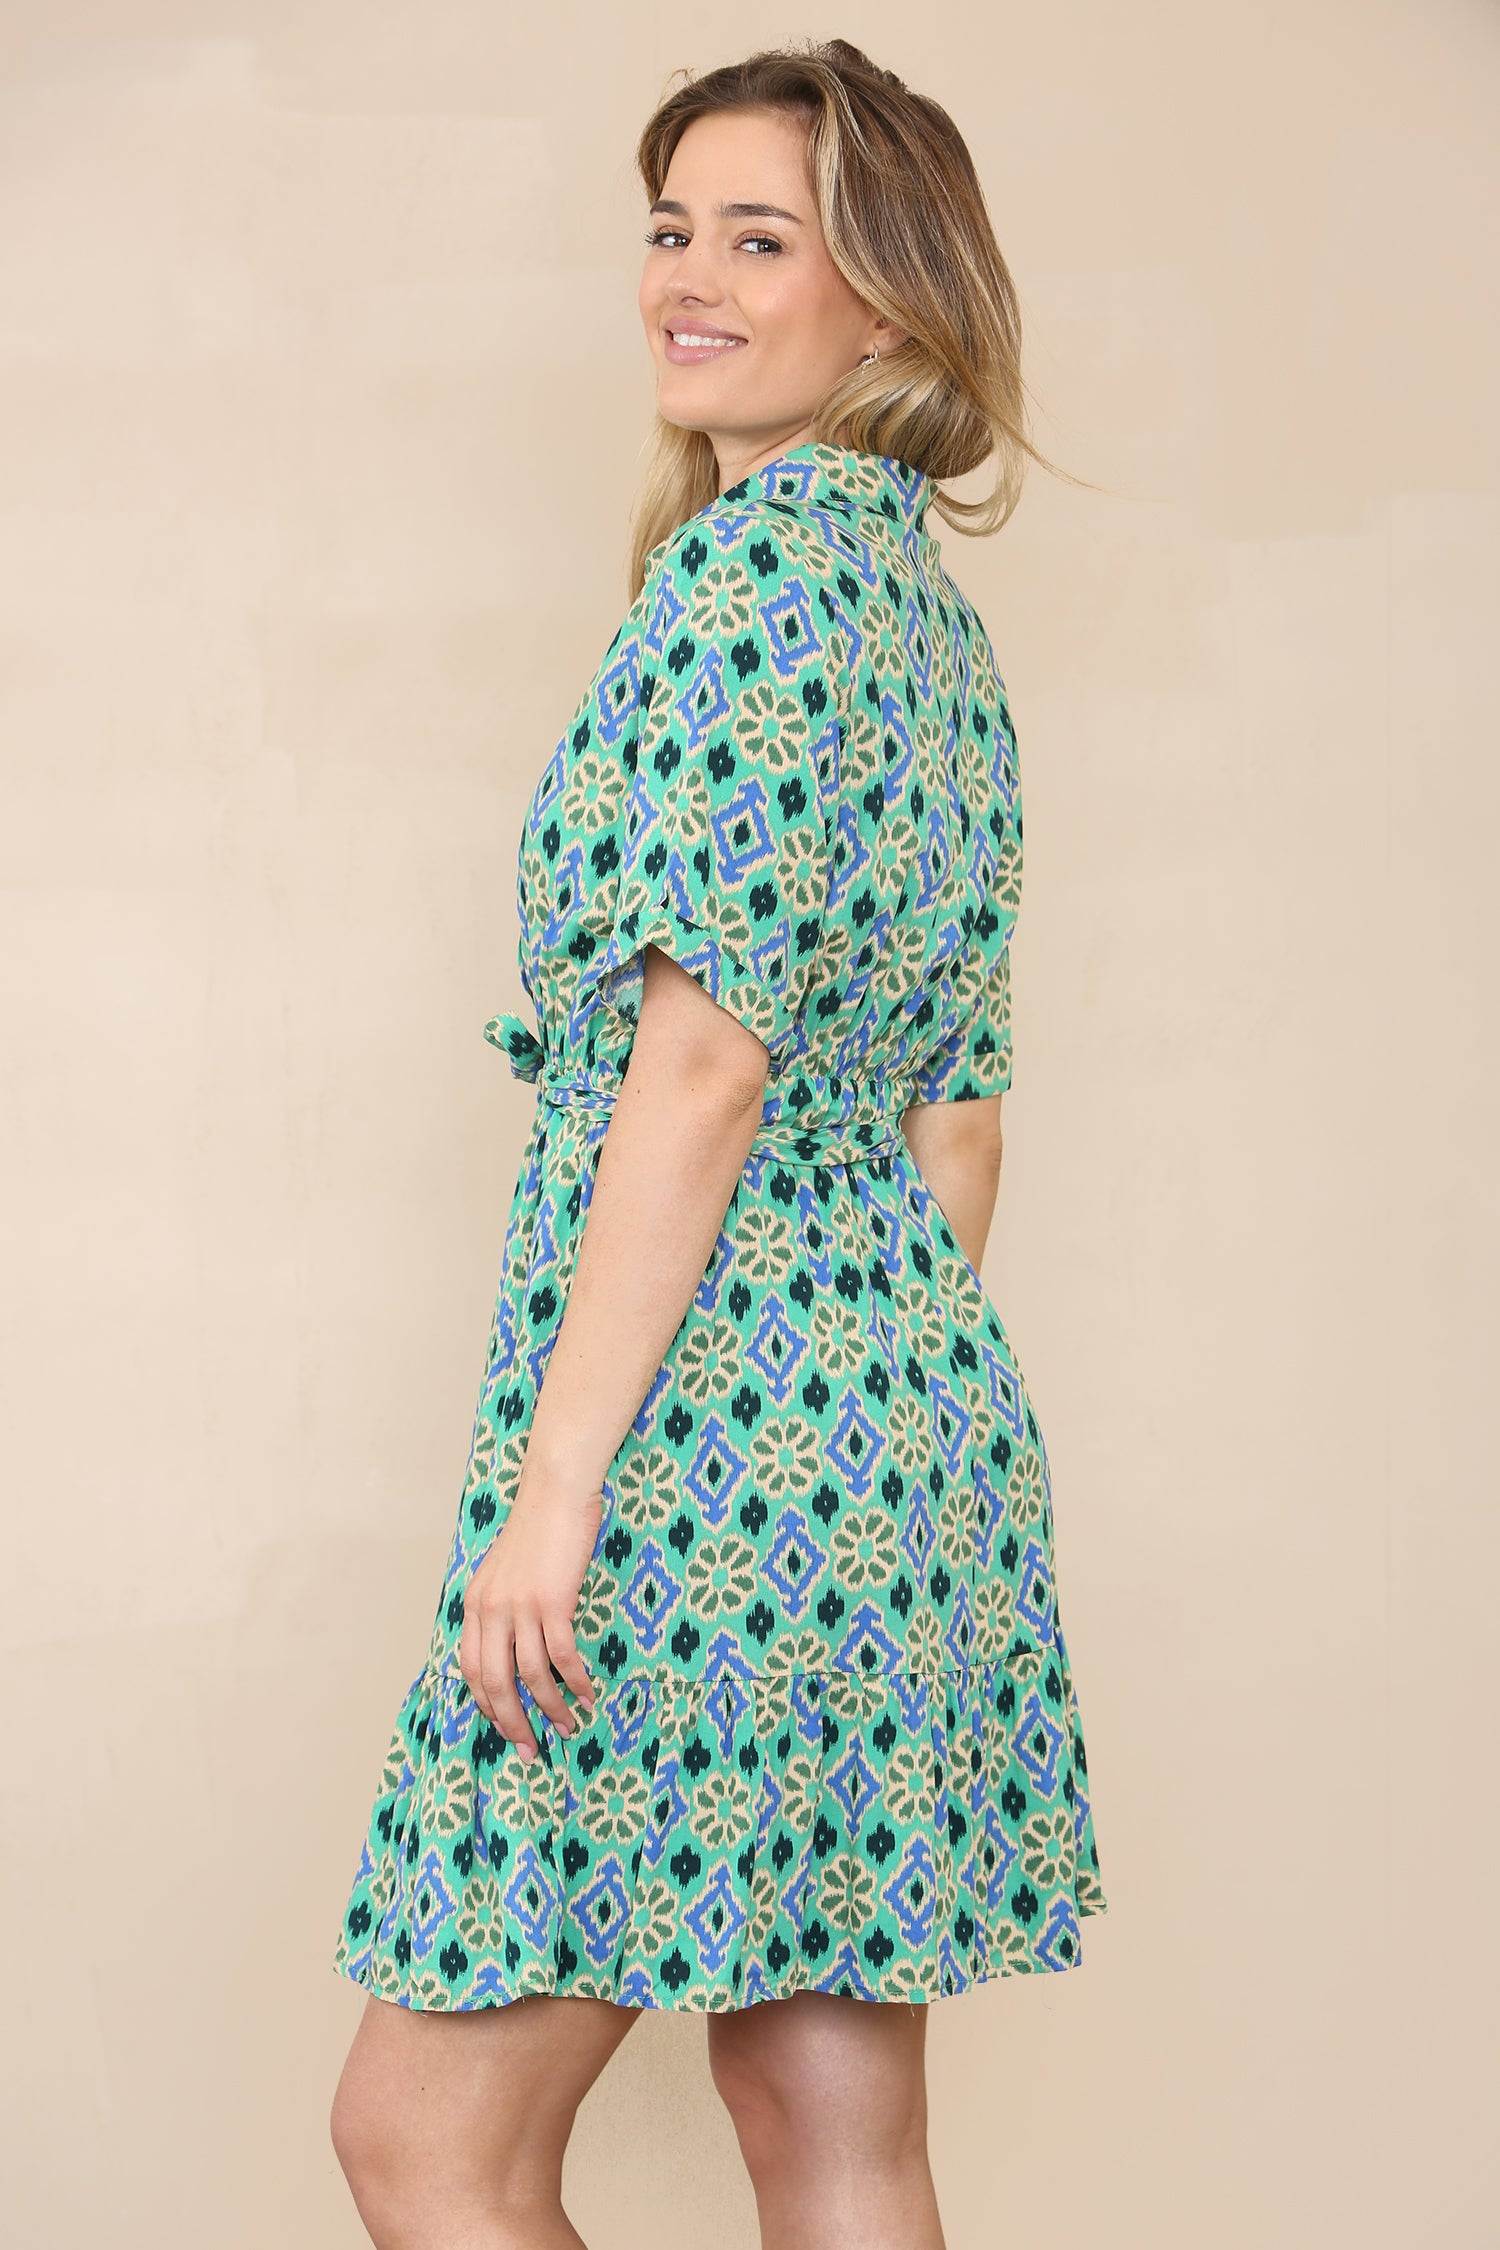 Love Sunshine Green Floral Patterned Print Short Sleeve Shirt Dress LS-1700